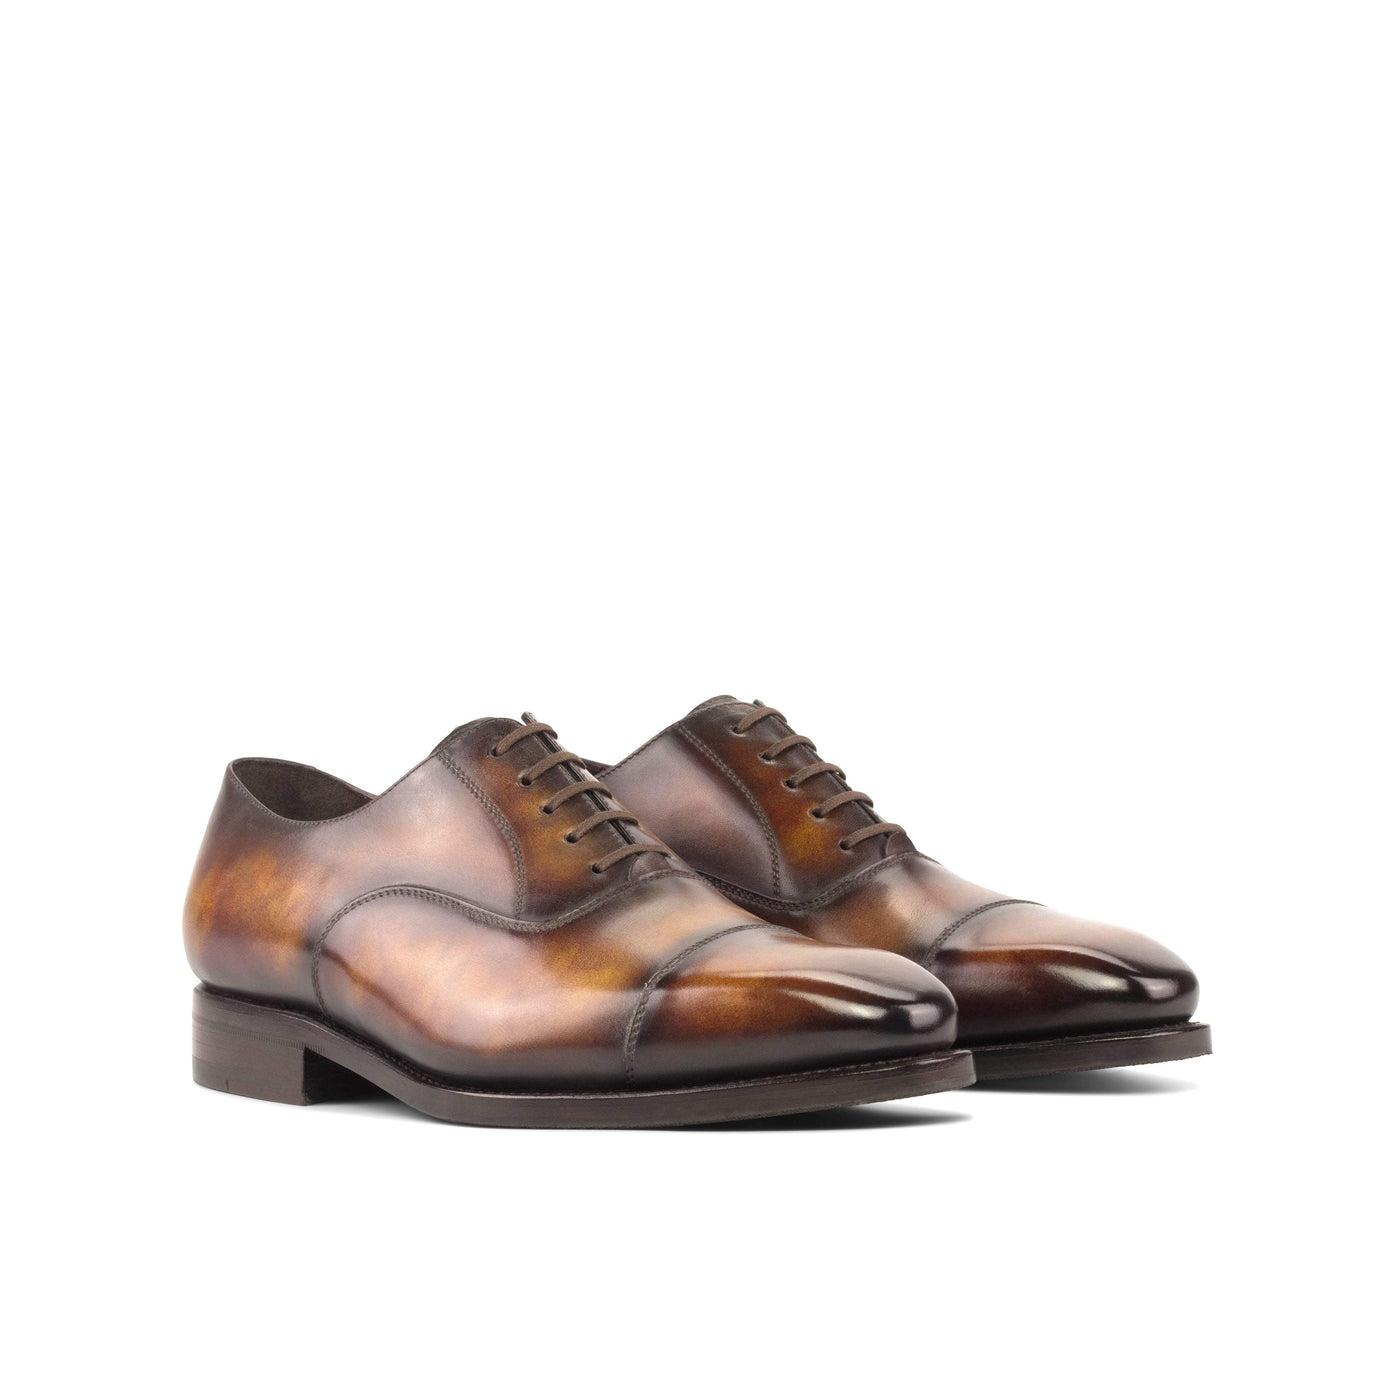 Men's Oxford Shoes Patina Leather Goodyear Welt Burgundy 5252 6- MERRIMIUM